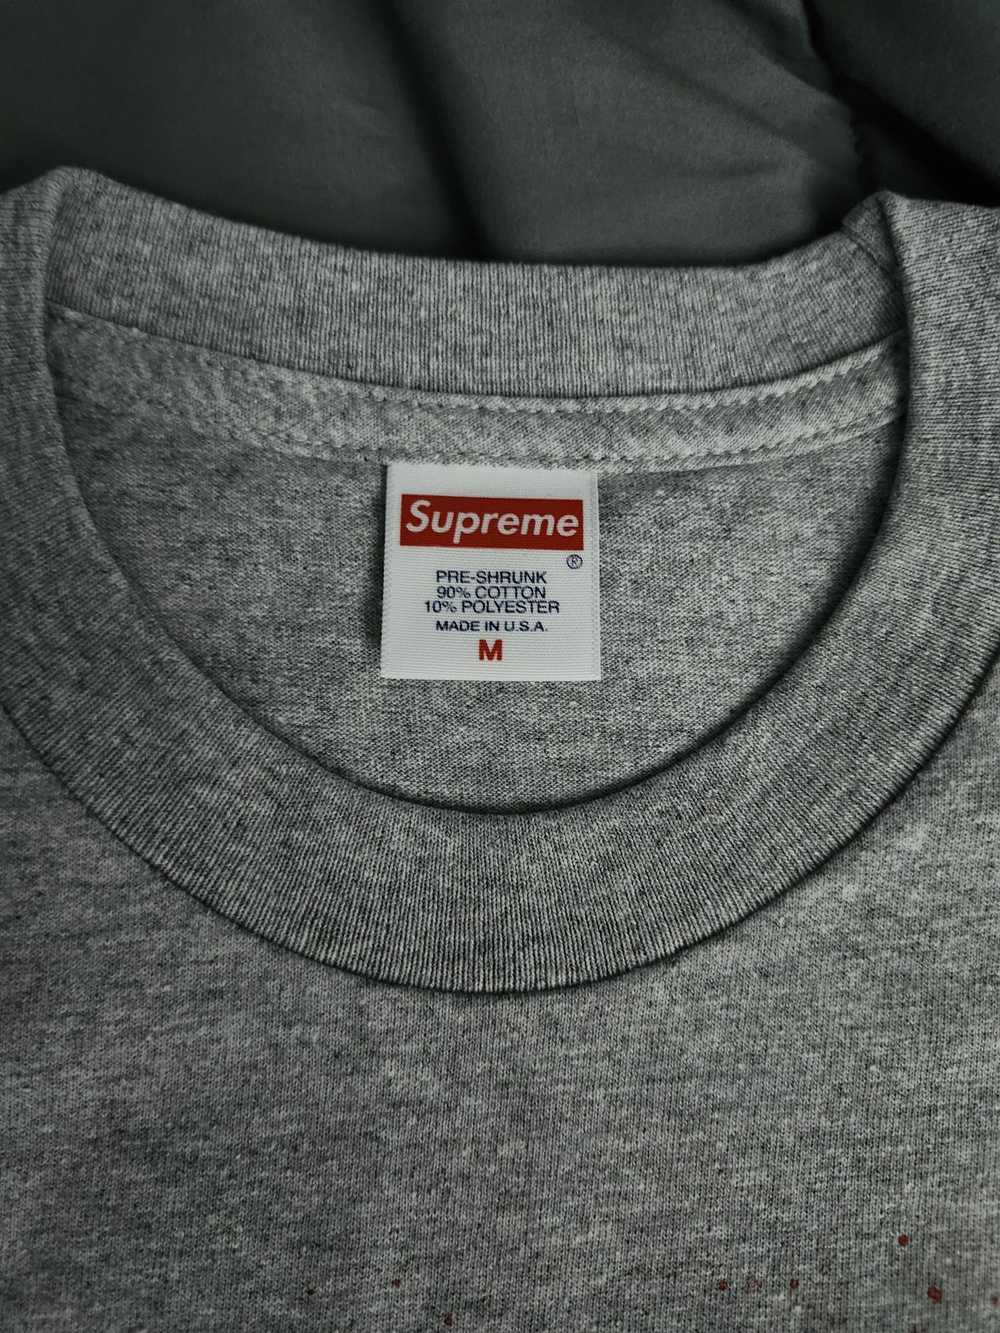 Supreme Supreme Logo Paint T Shirt Gray - image 2